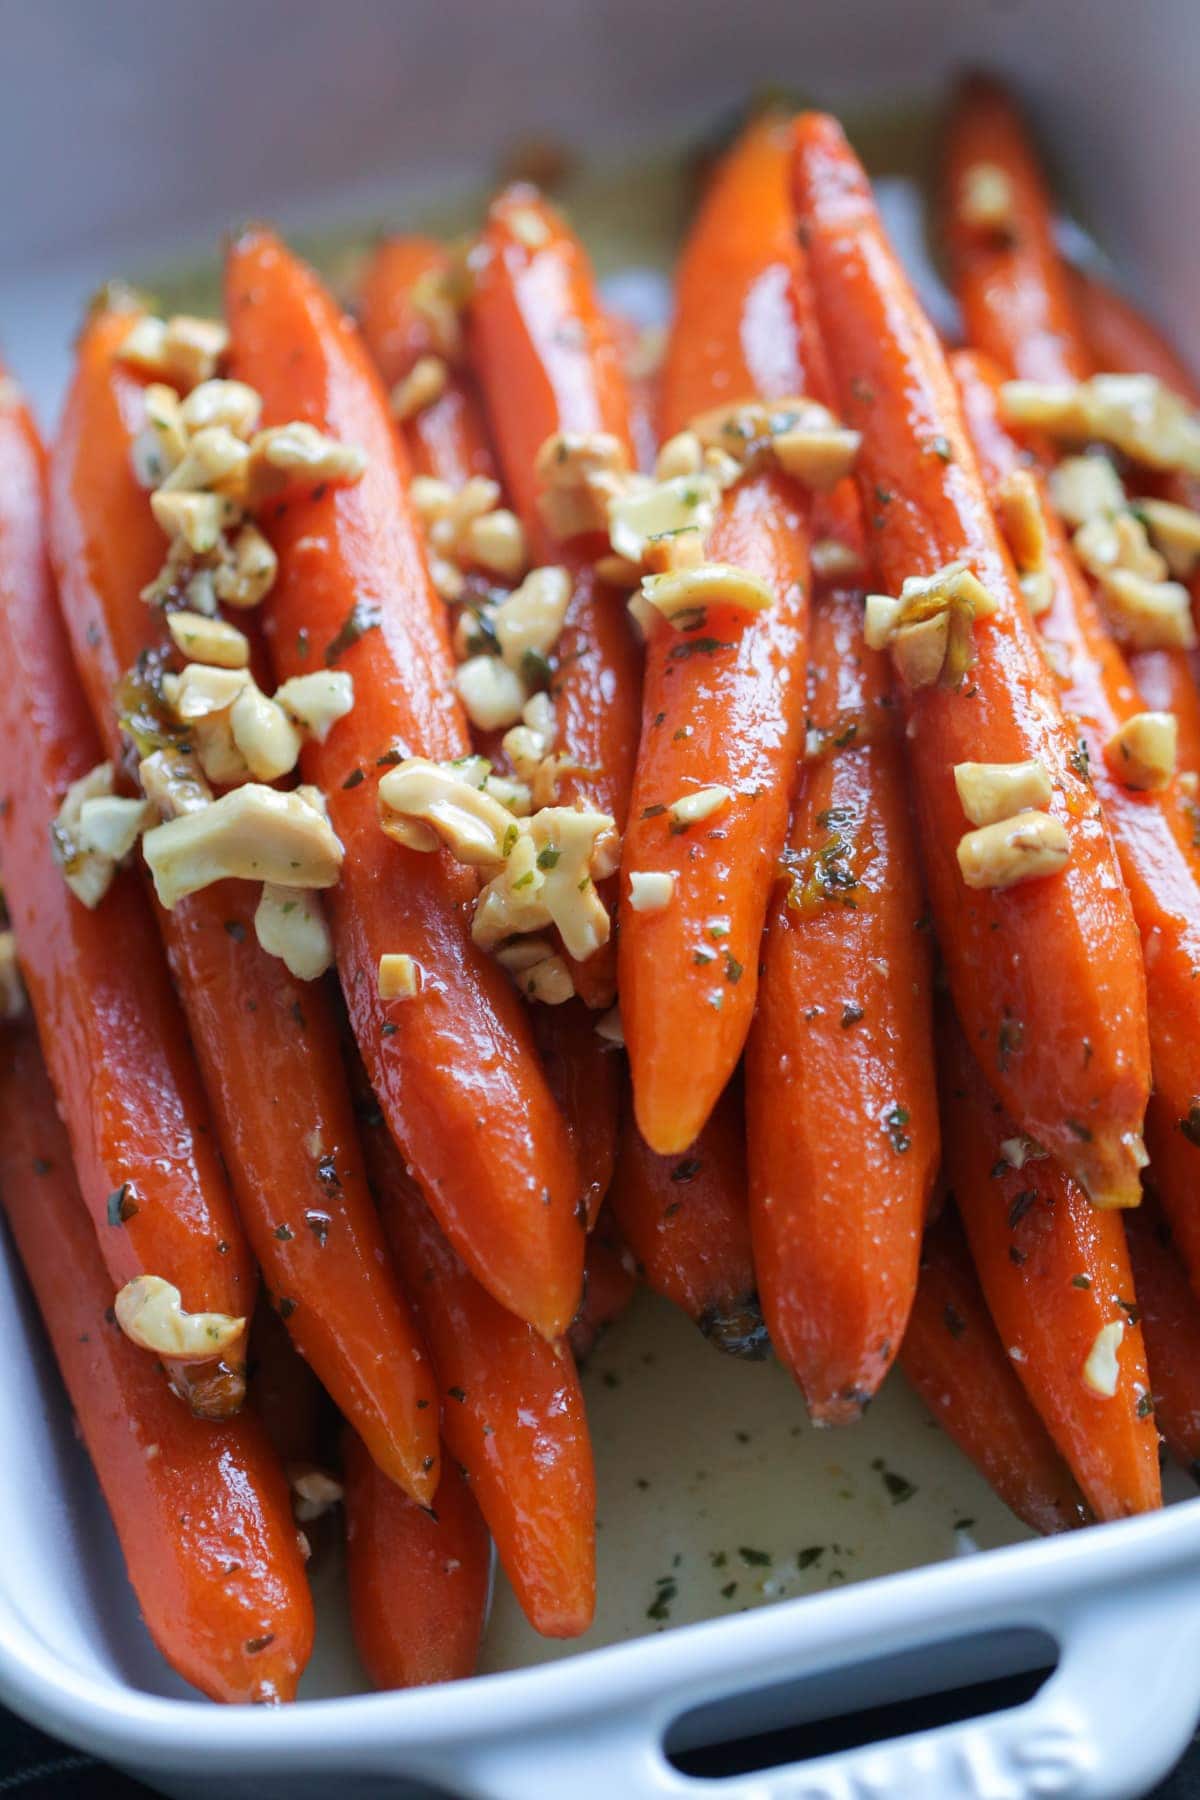 Maple Glazed Carrots